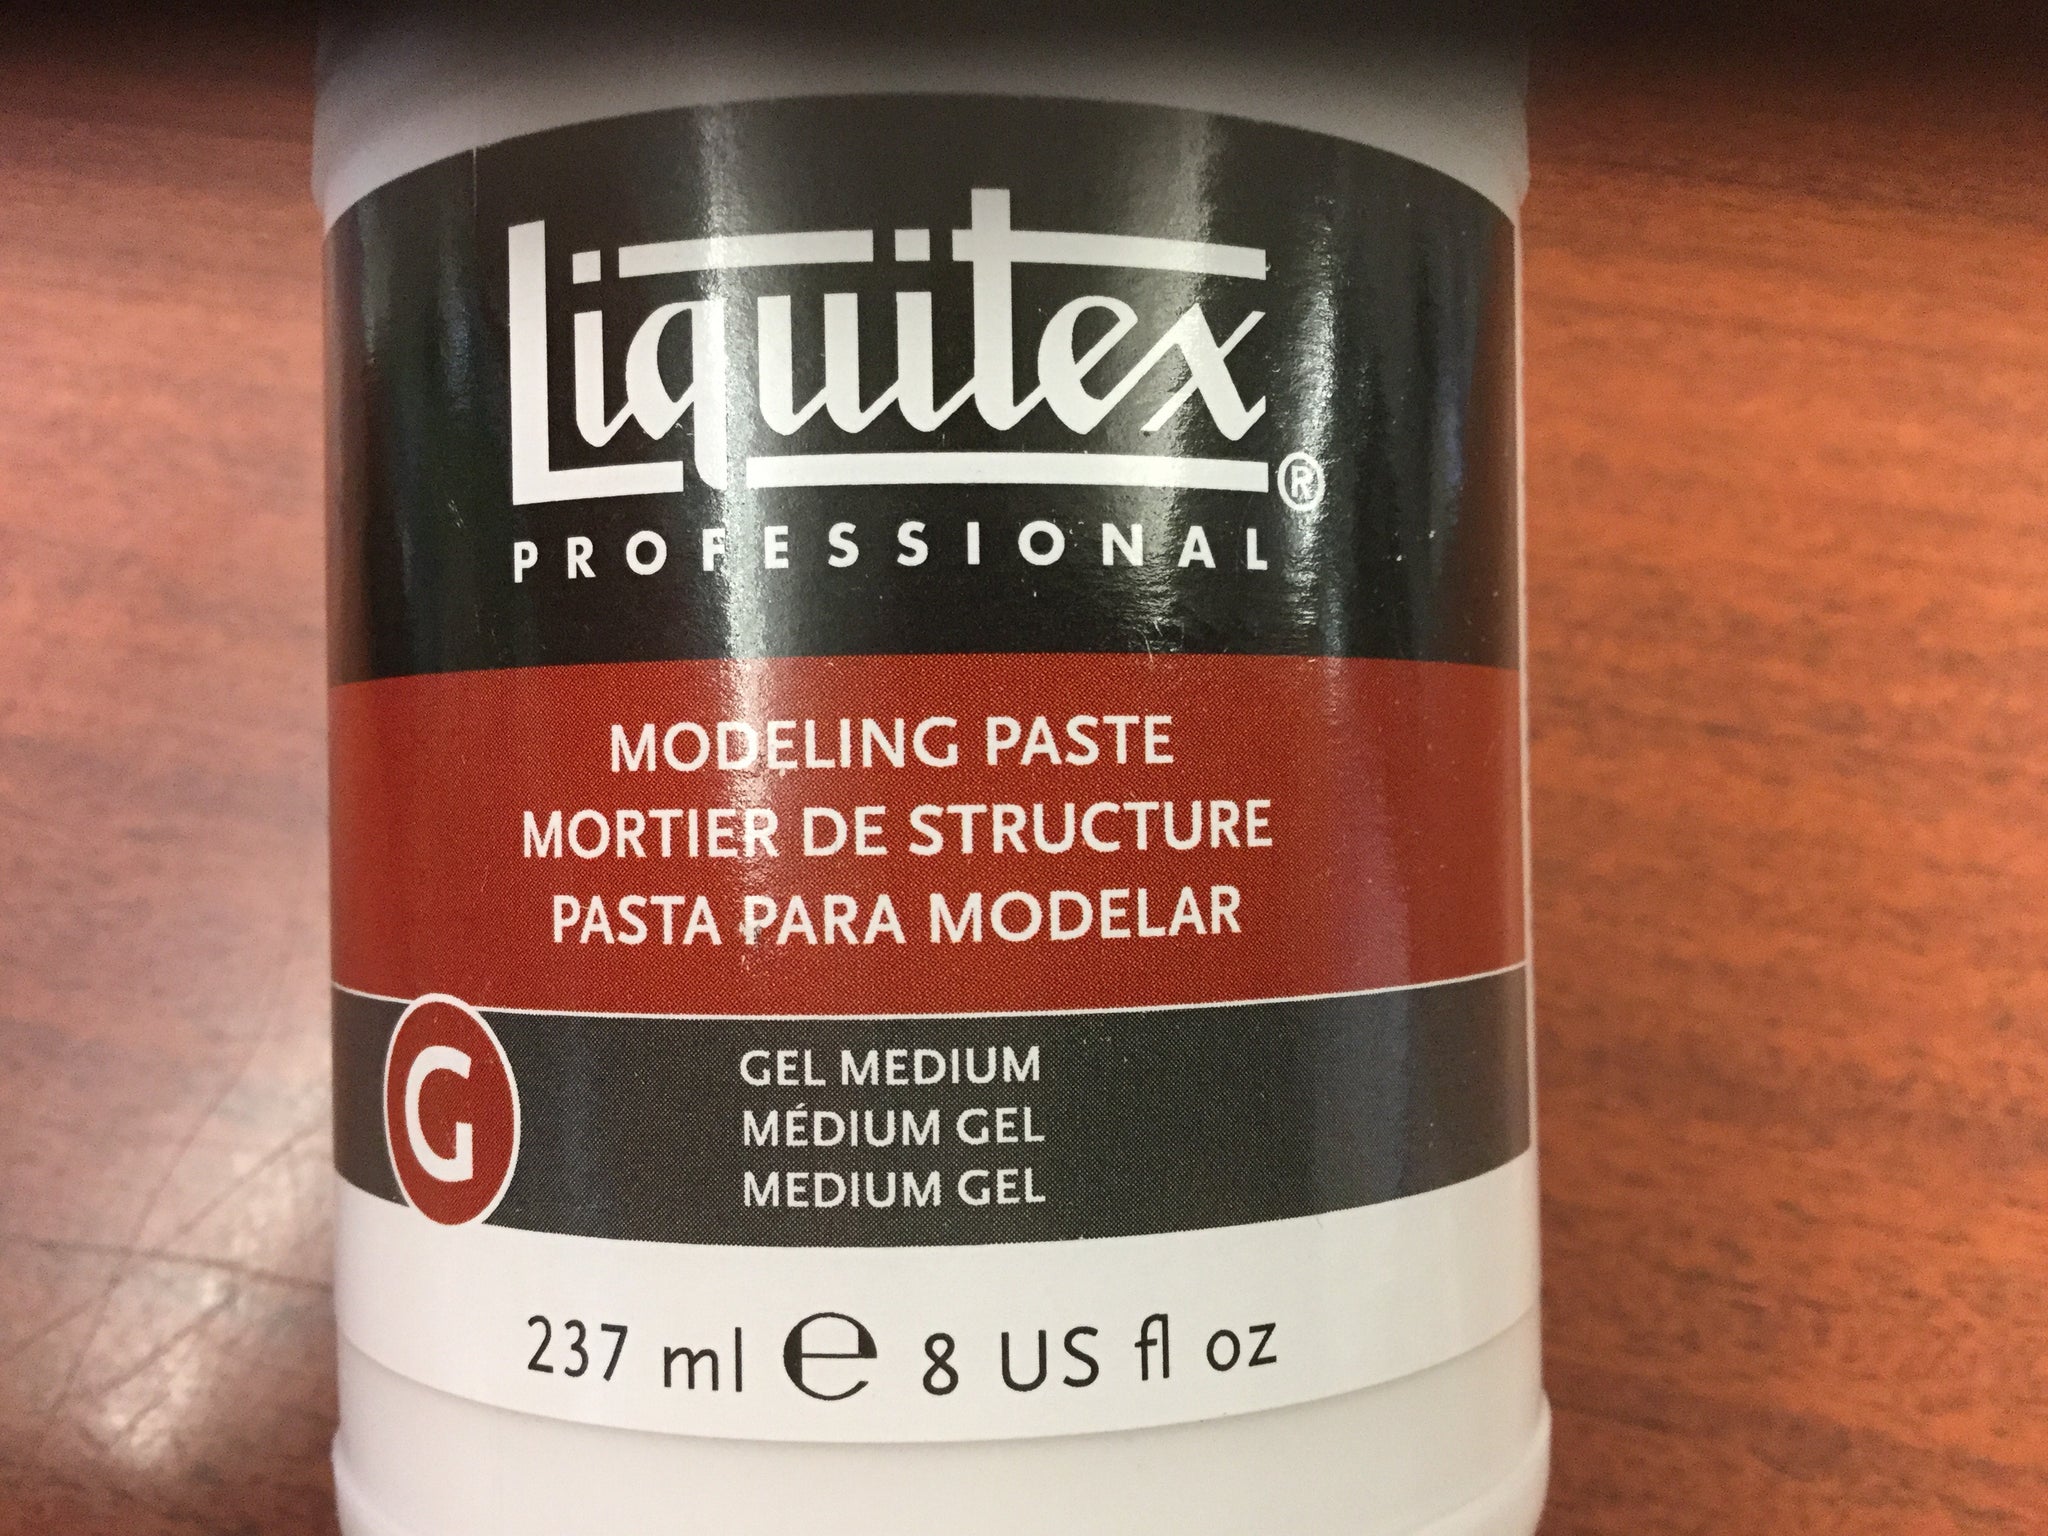 Liquitex modeling paste